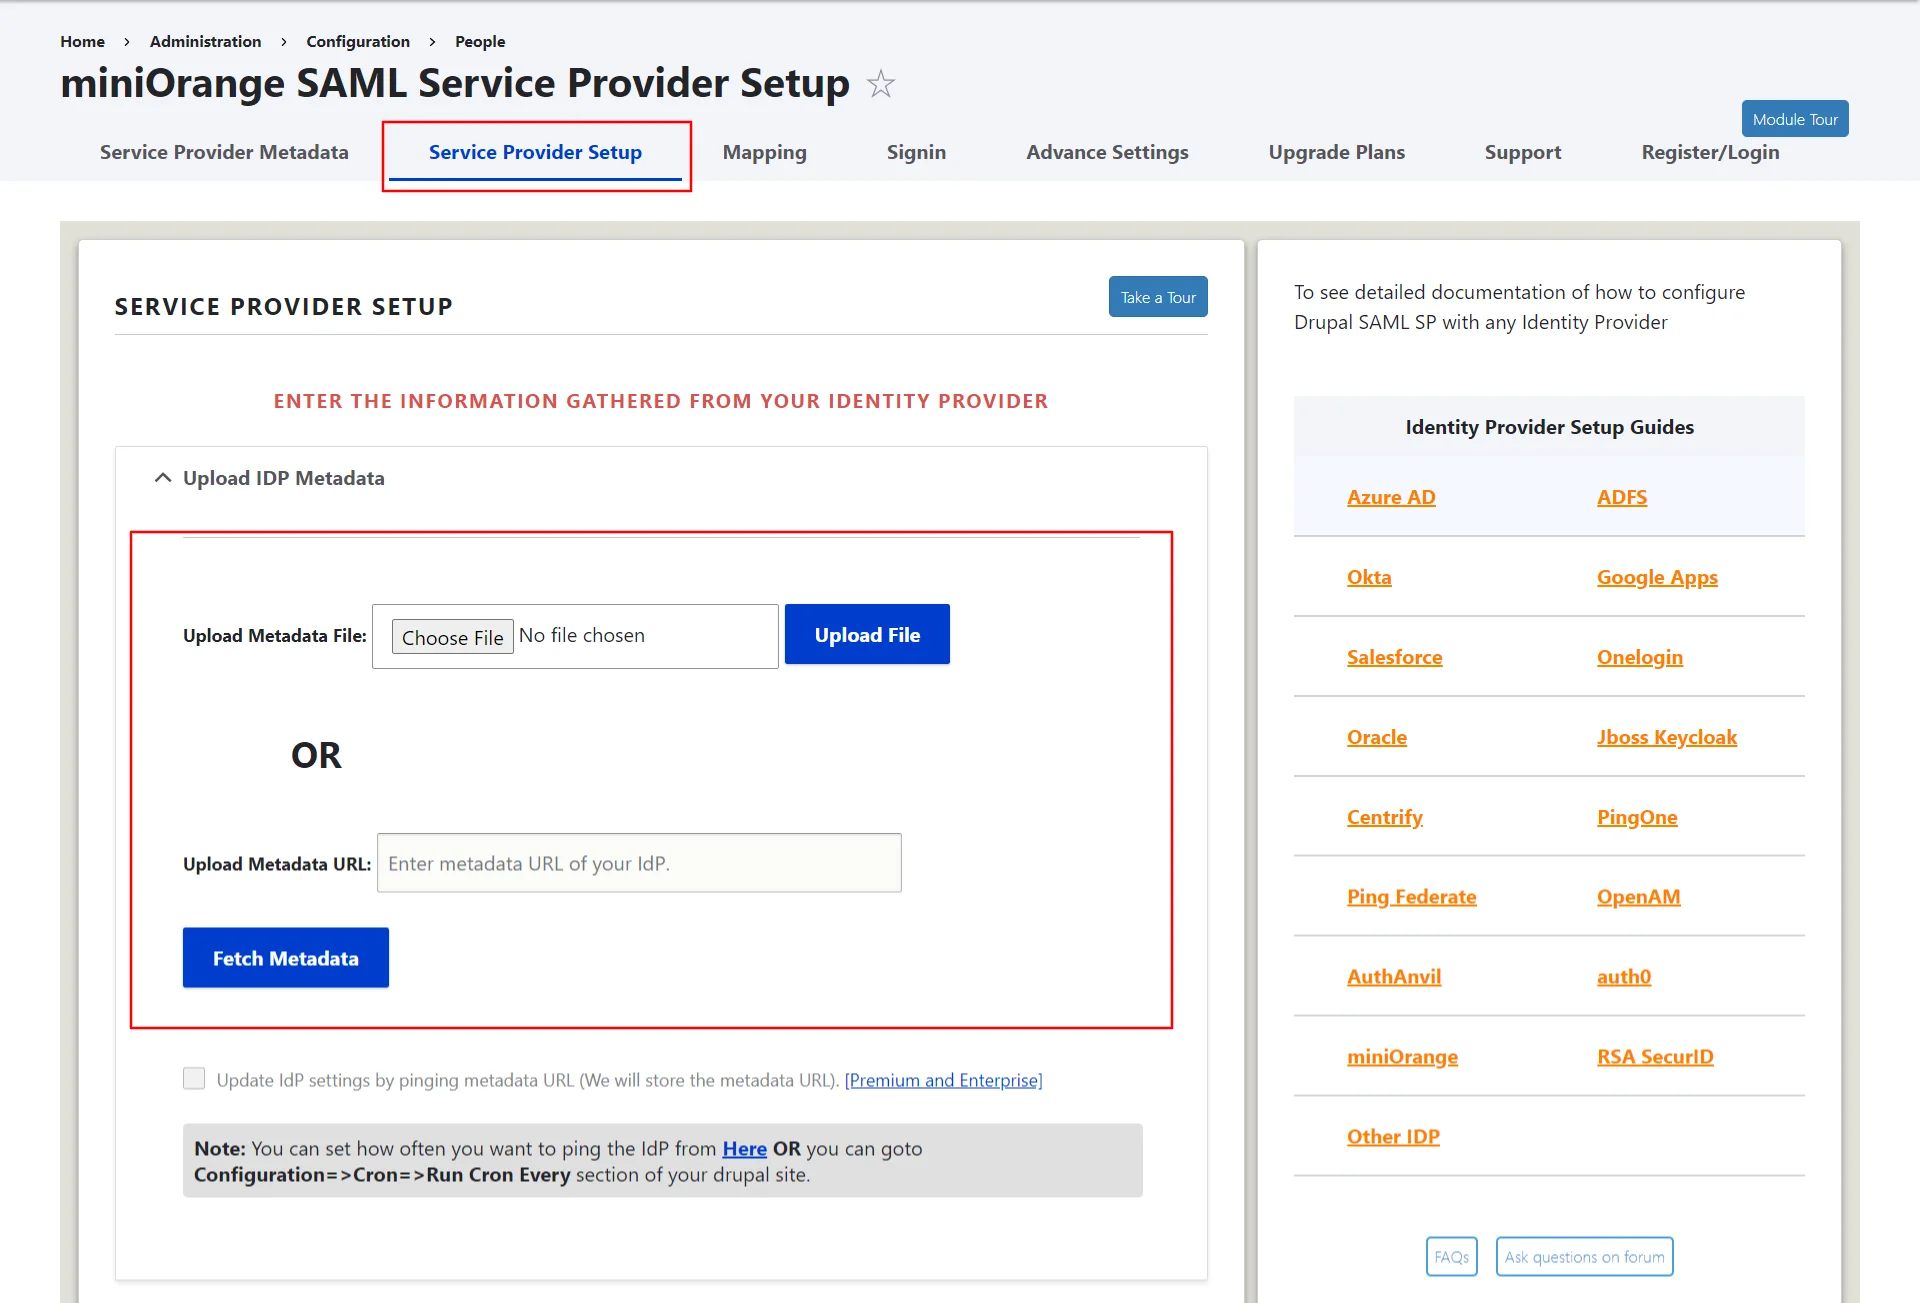 Drupal SAML Service Provider - upload idp metadata